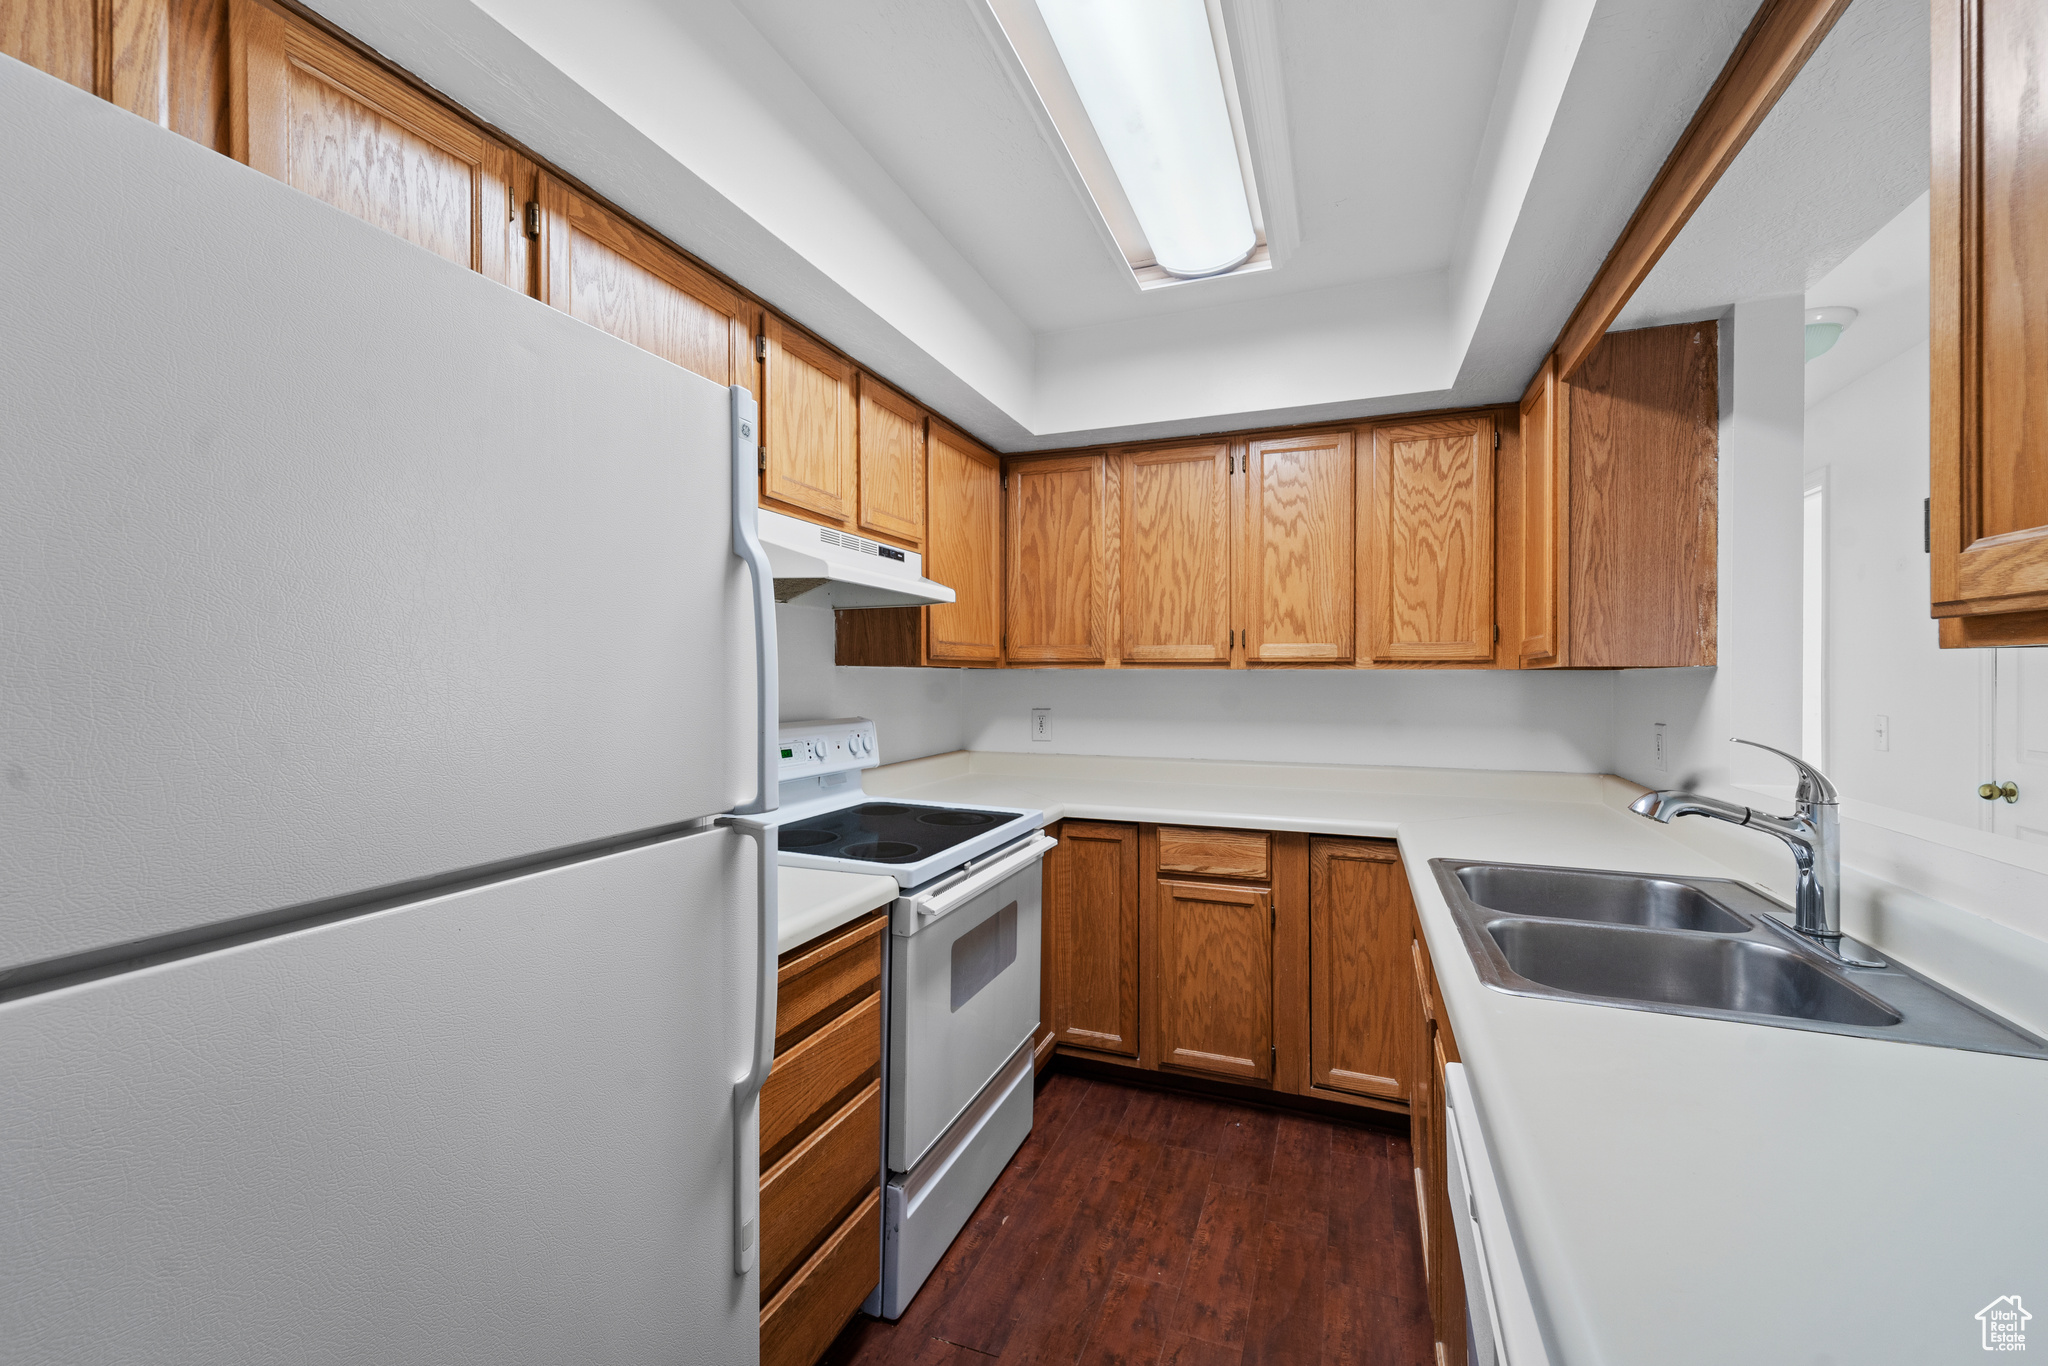 Kitchen with white appliances, dark hardwood-style laminate